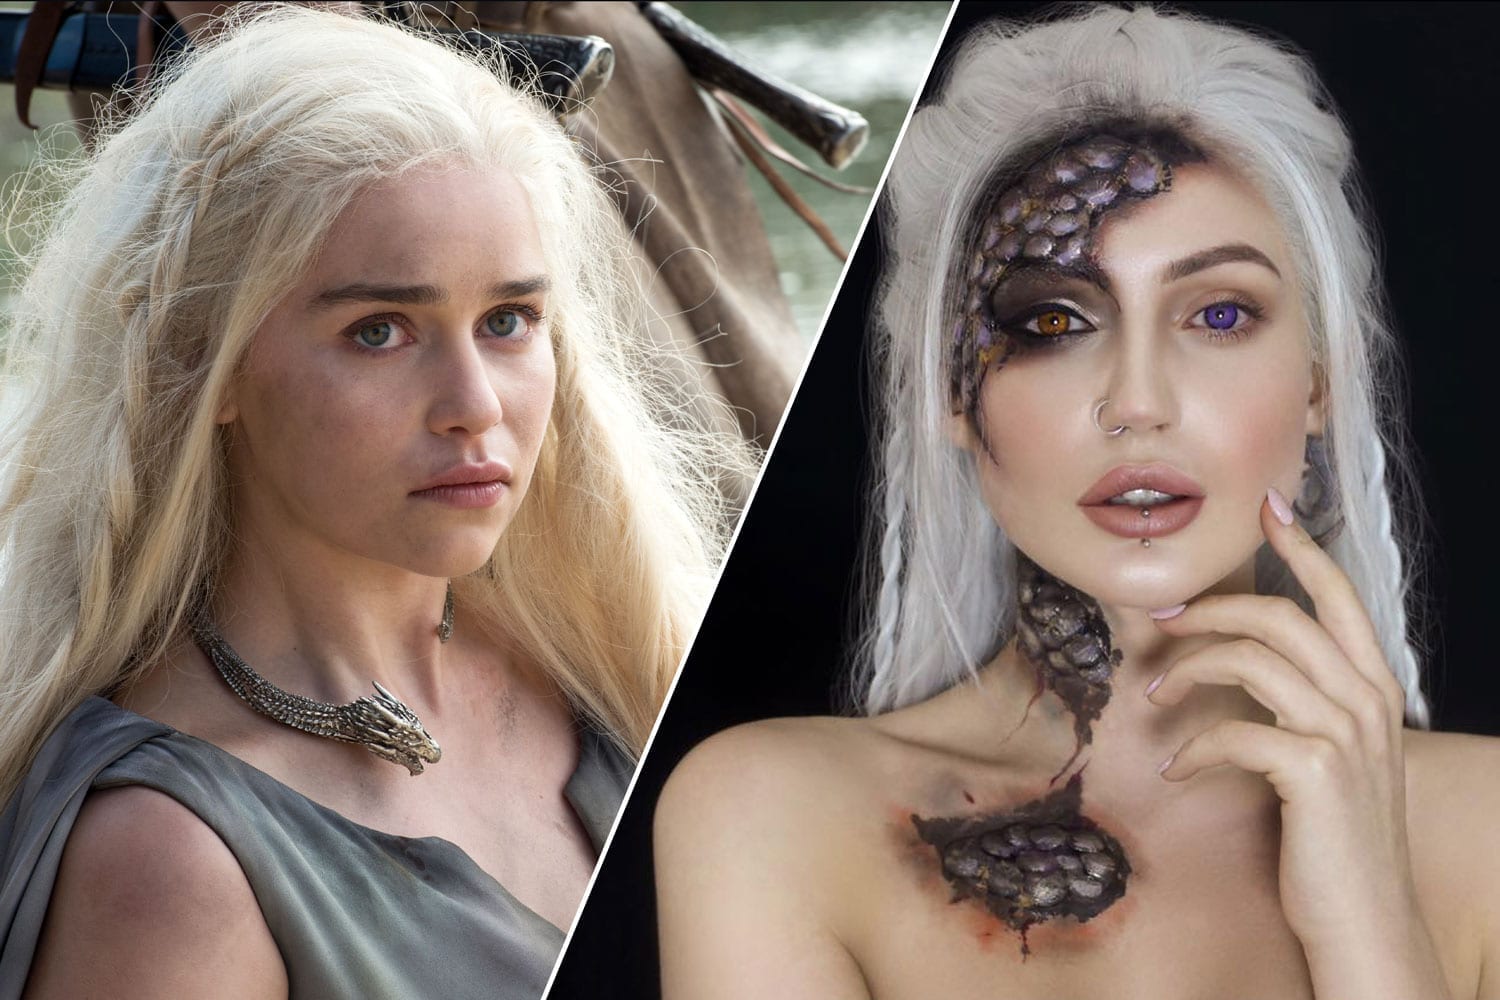 A side by side of Emilia Clark as Daenerys Targaryen and Sophia White cospainting as Daenerys Targaryen.